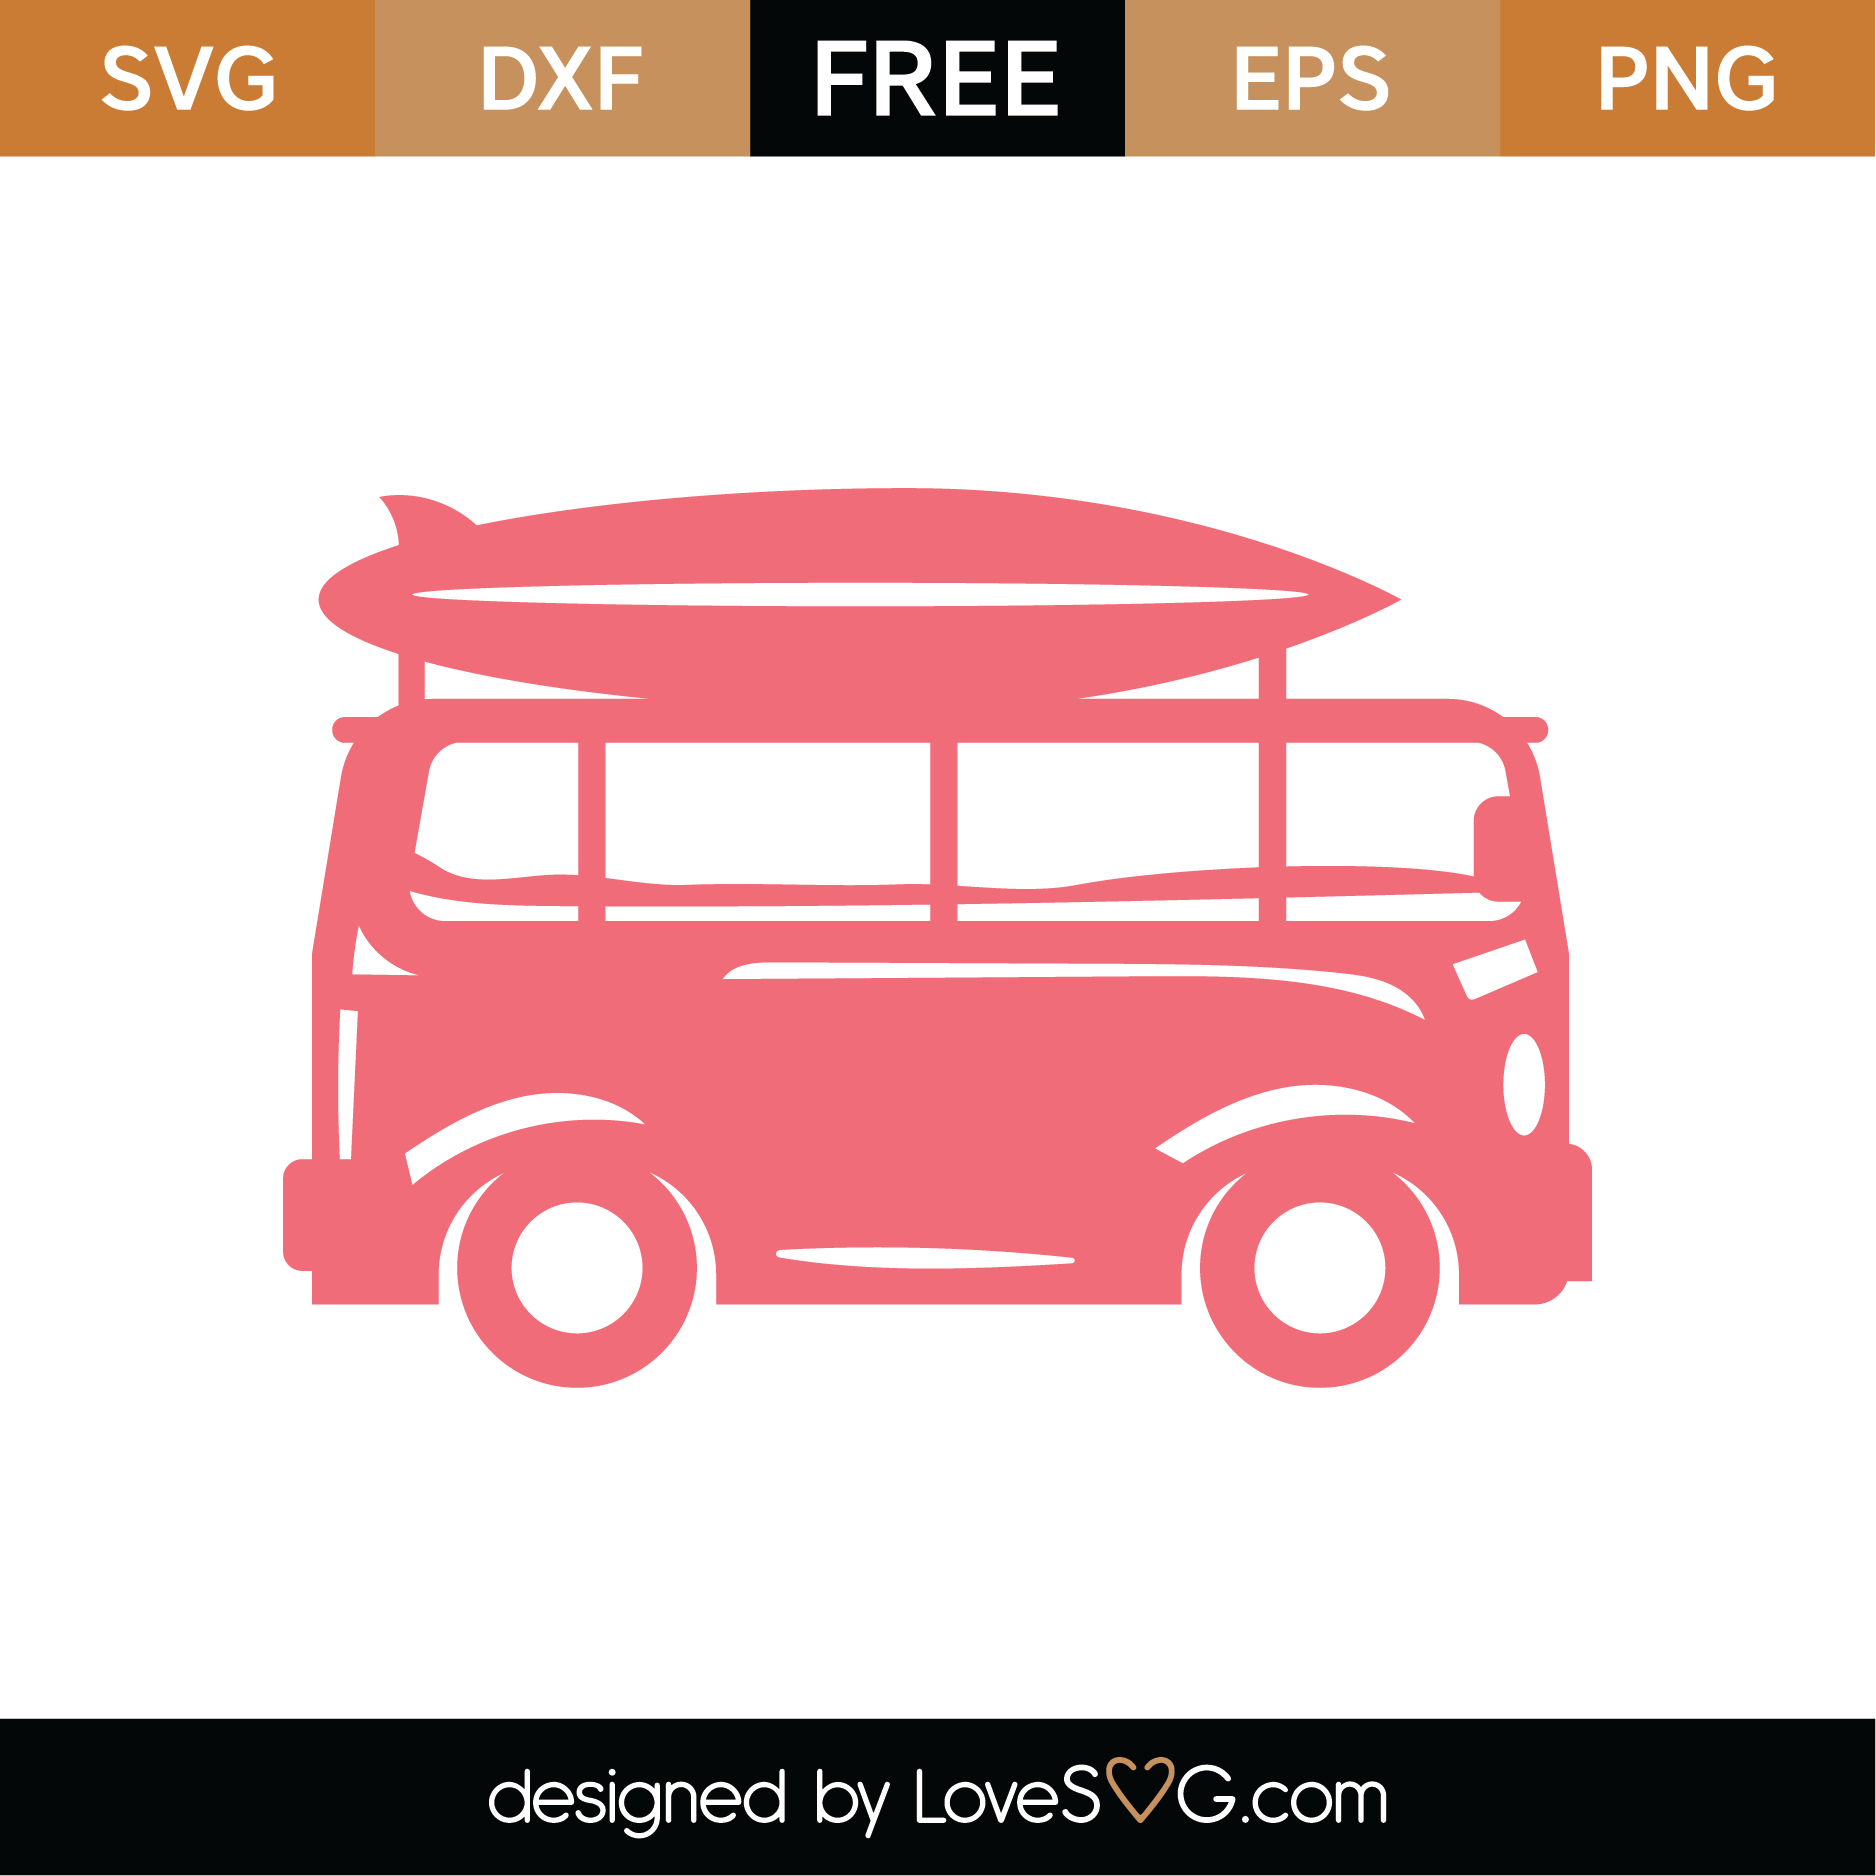 Download Free Beach Van SVG Cut File | Lovesvg.com